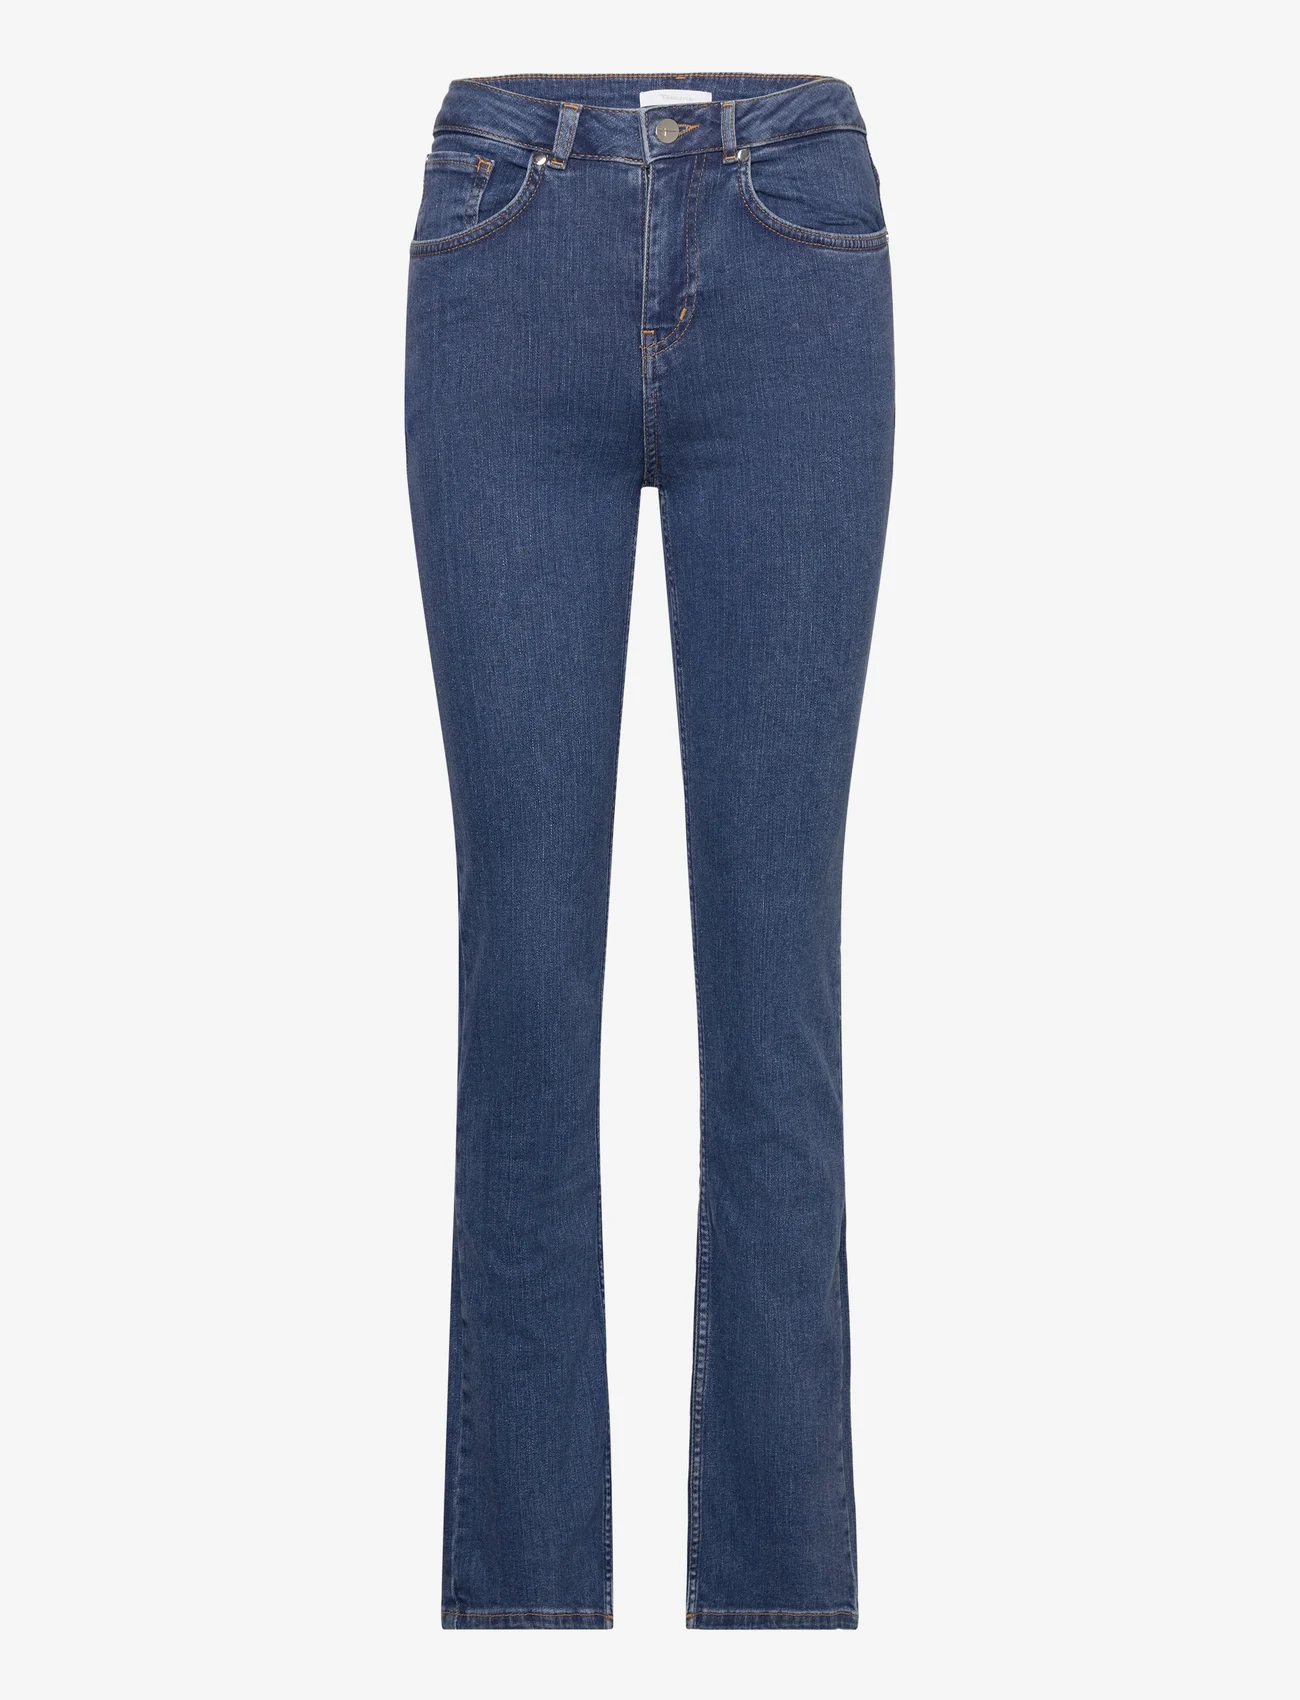 Tamaris Apparel - AGBOR slim jeans - flared jeans - mid blue denim - 0